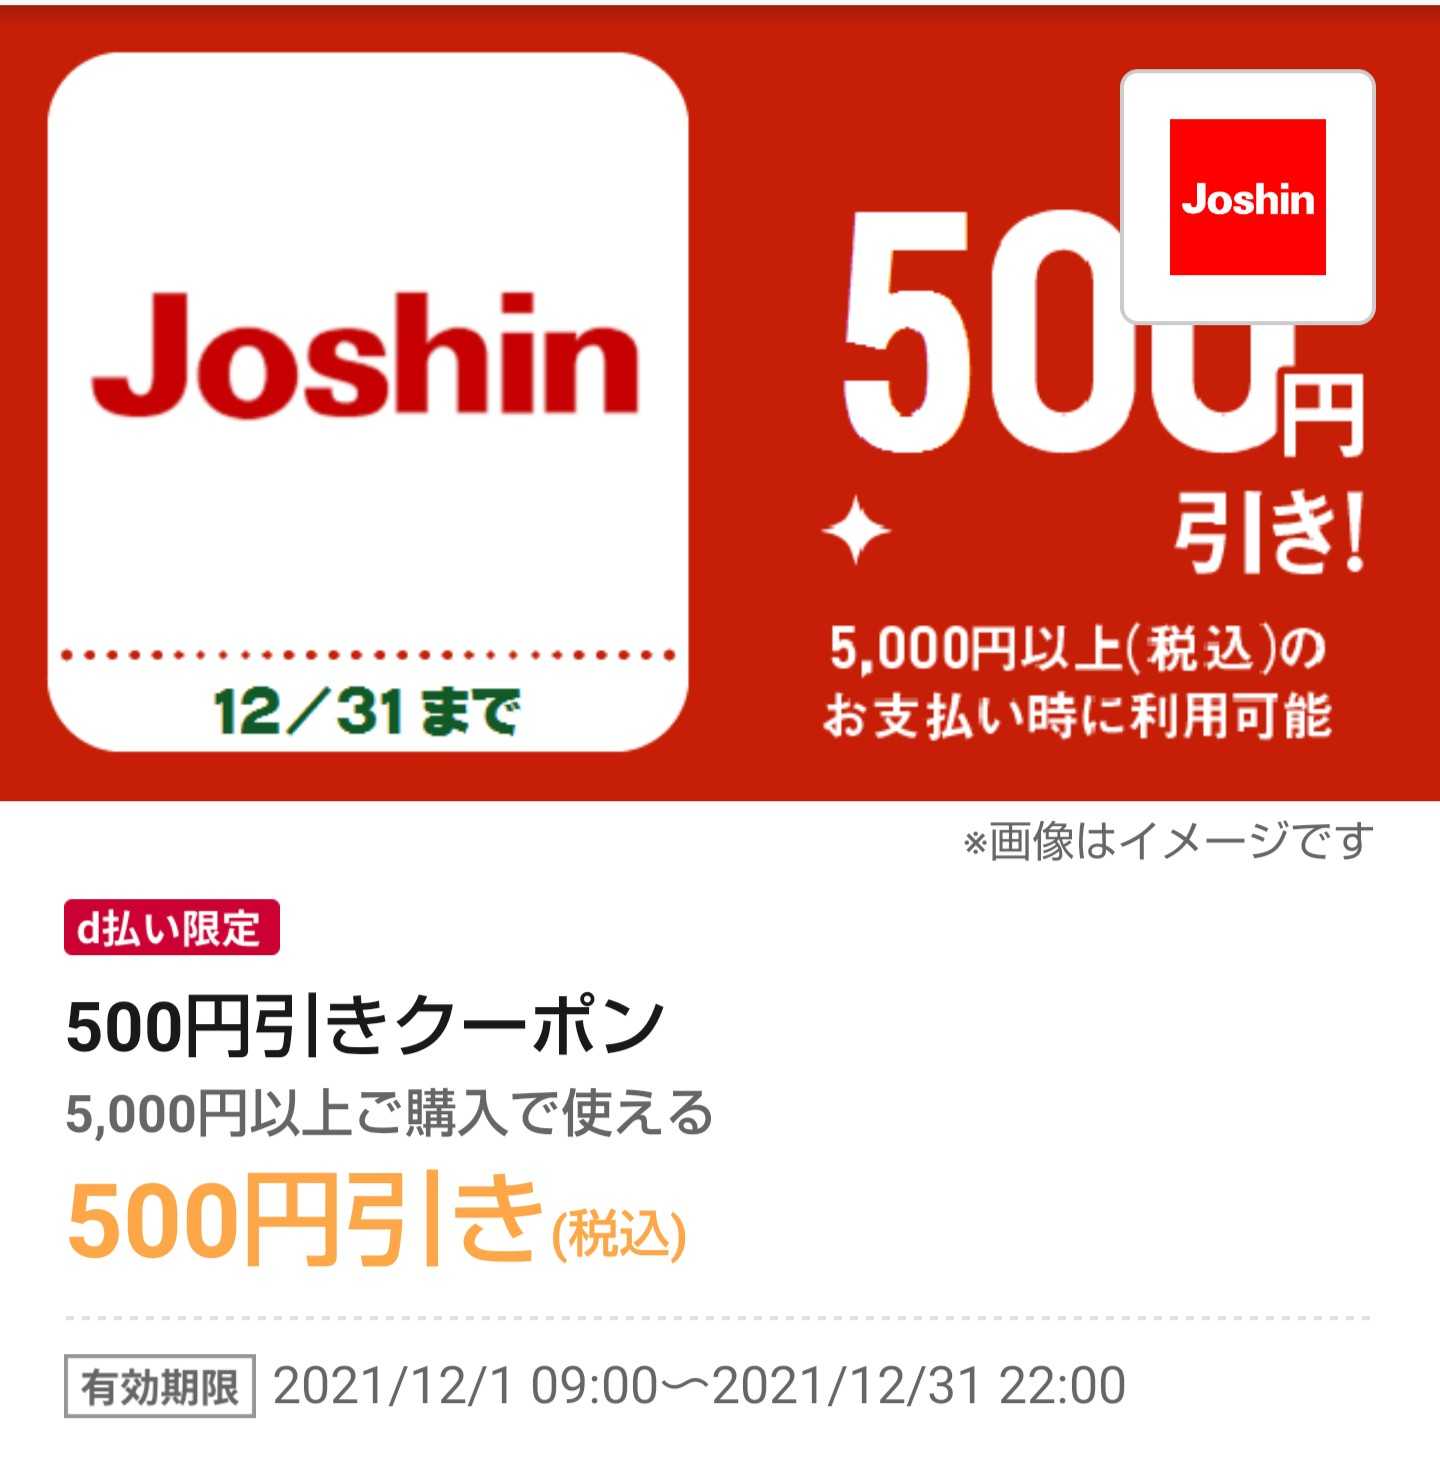 Joshin株主優待券 5000円×10冊の+kihoku-lp.jp